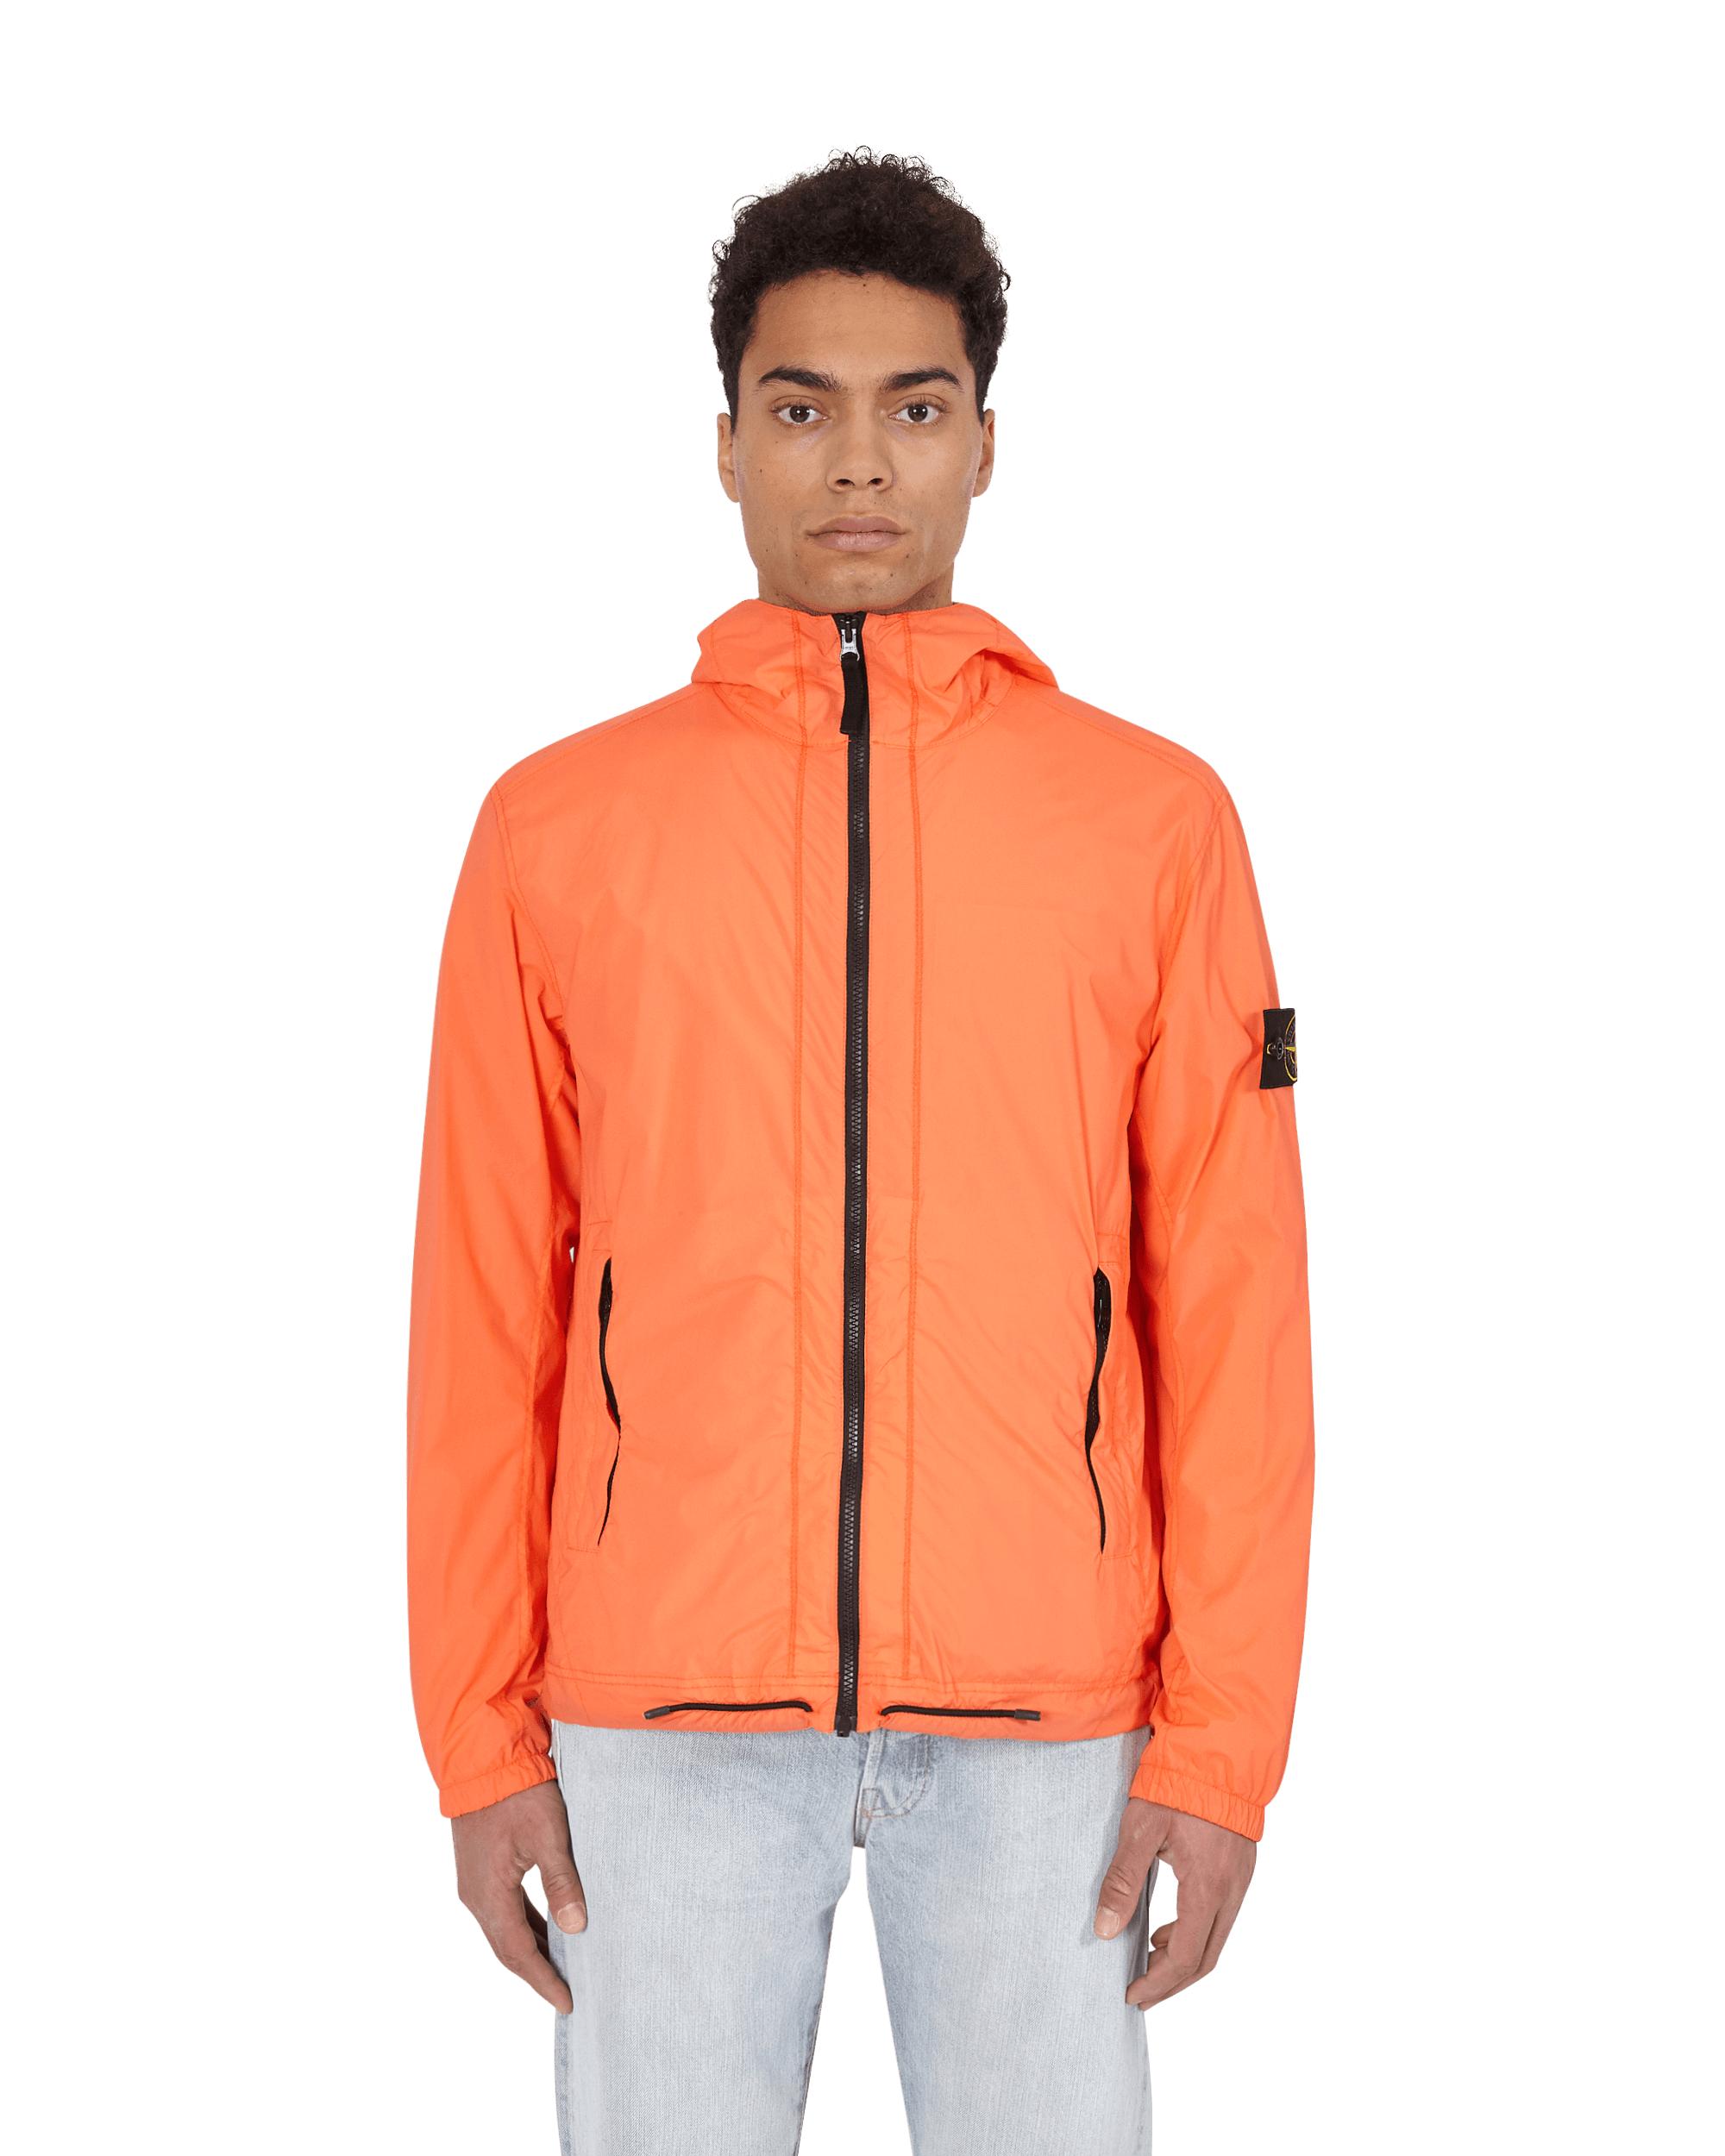 Stone Island Skin Touch Jacket in Orange for Men | Lyst UK